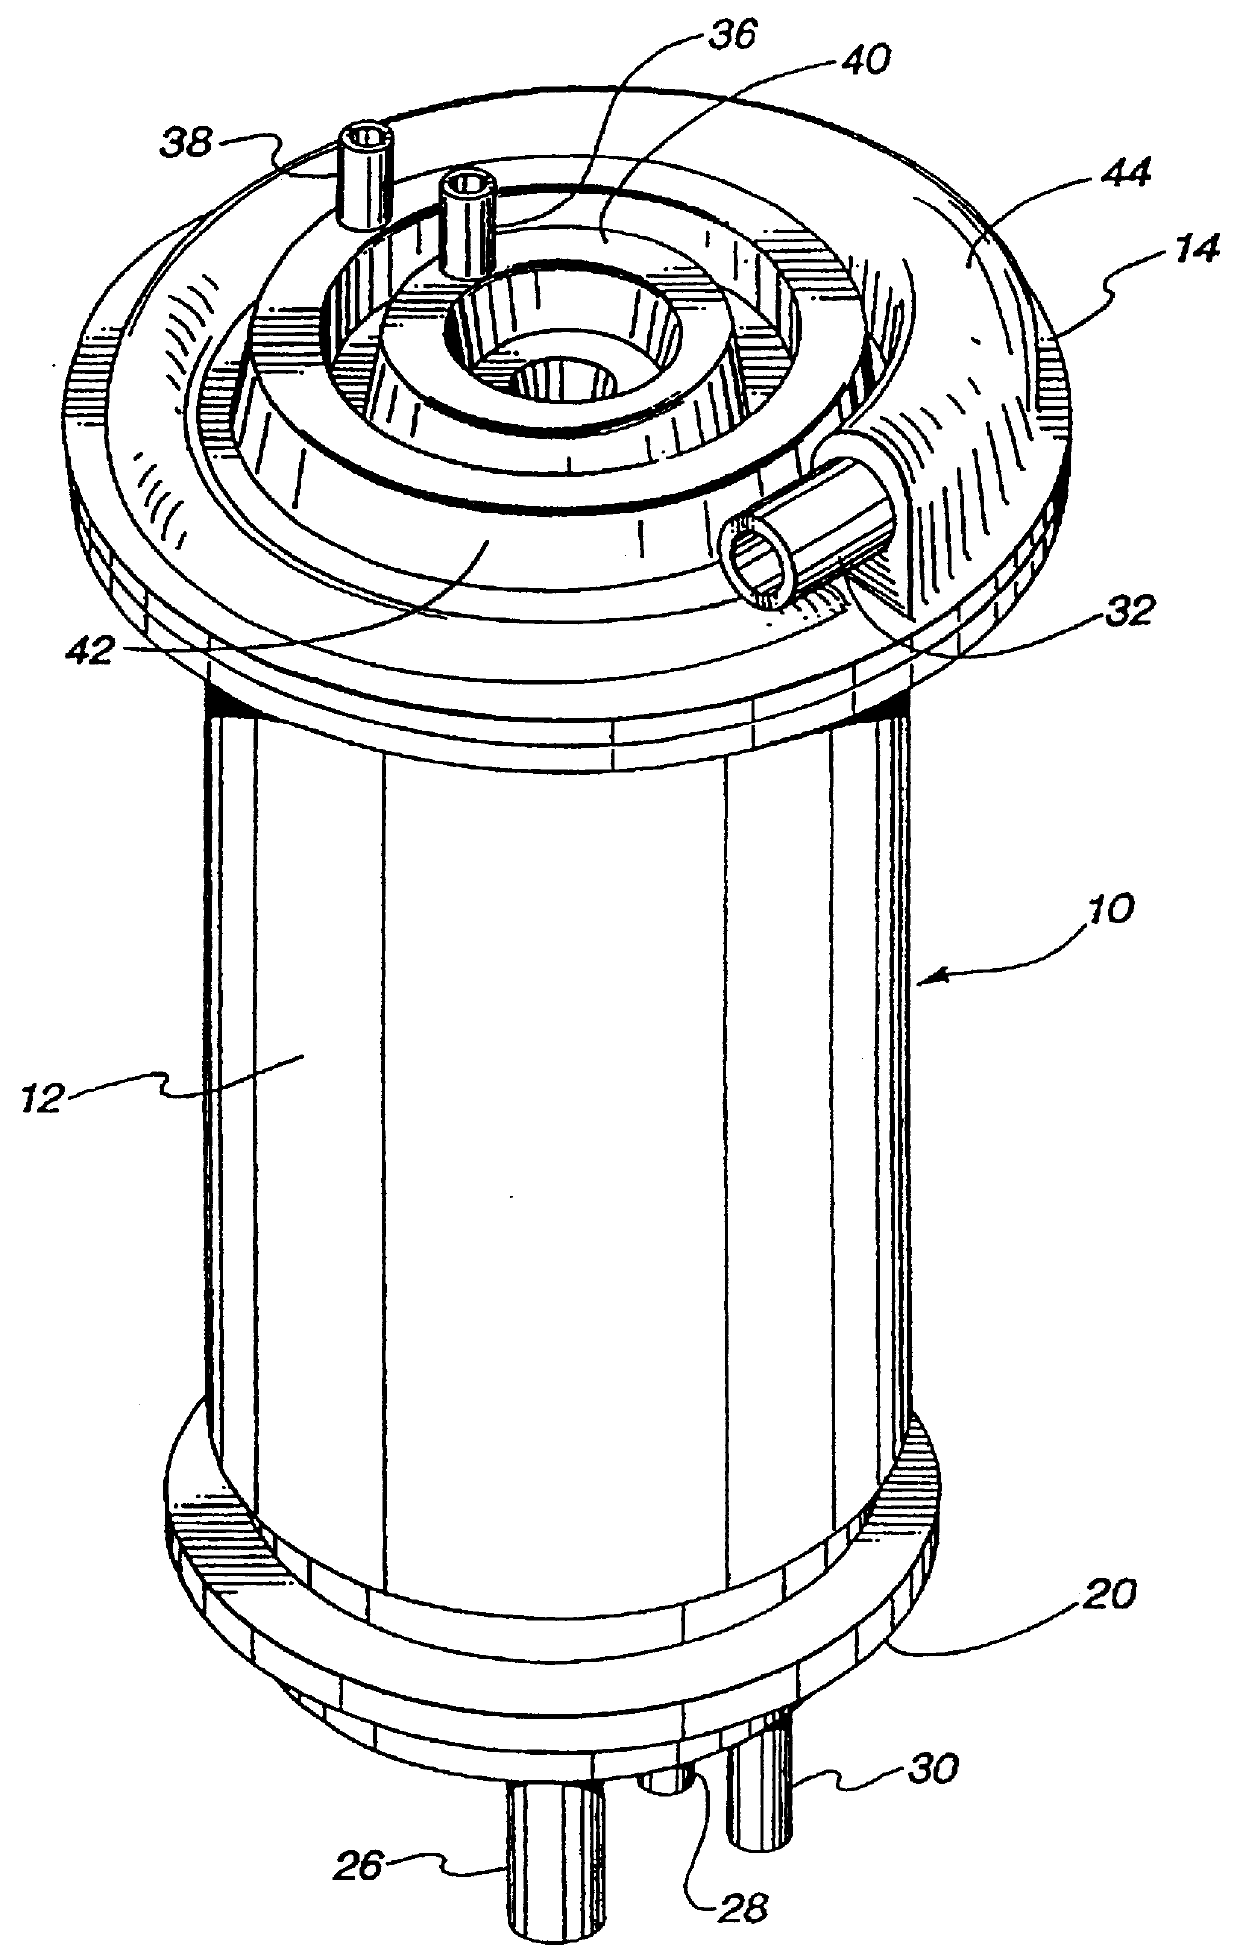 Cylindrical blood heater/oxygenator